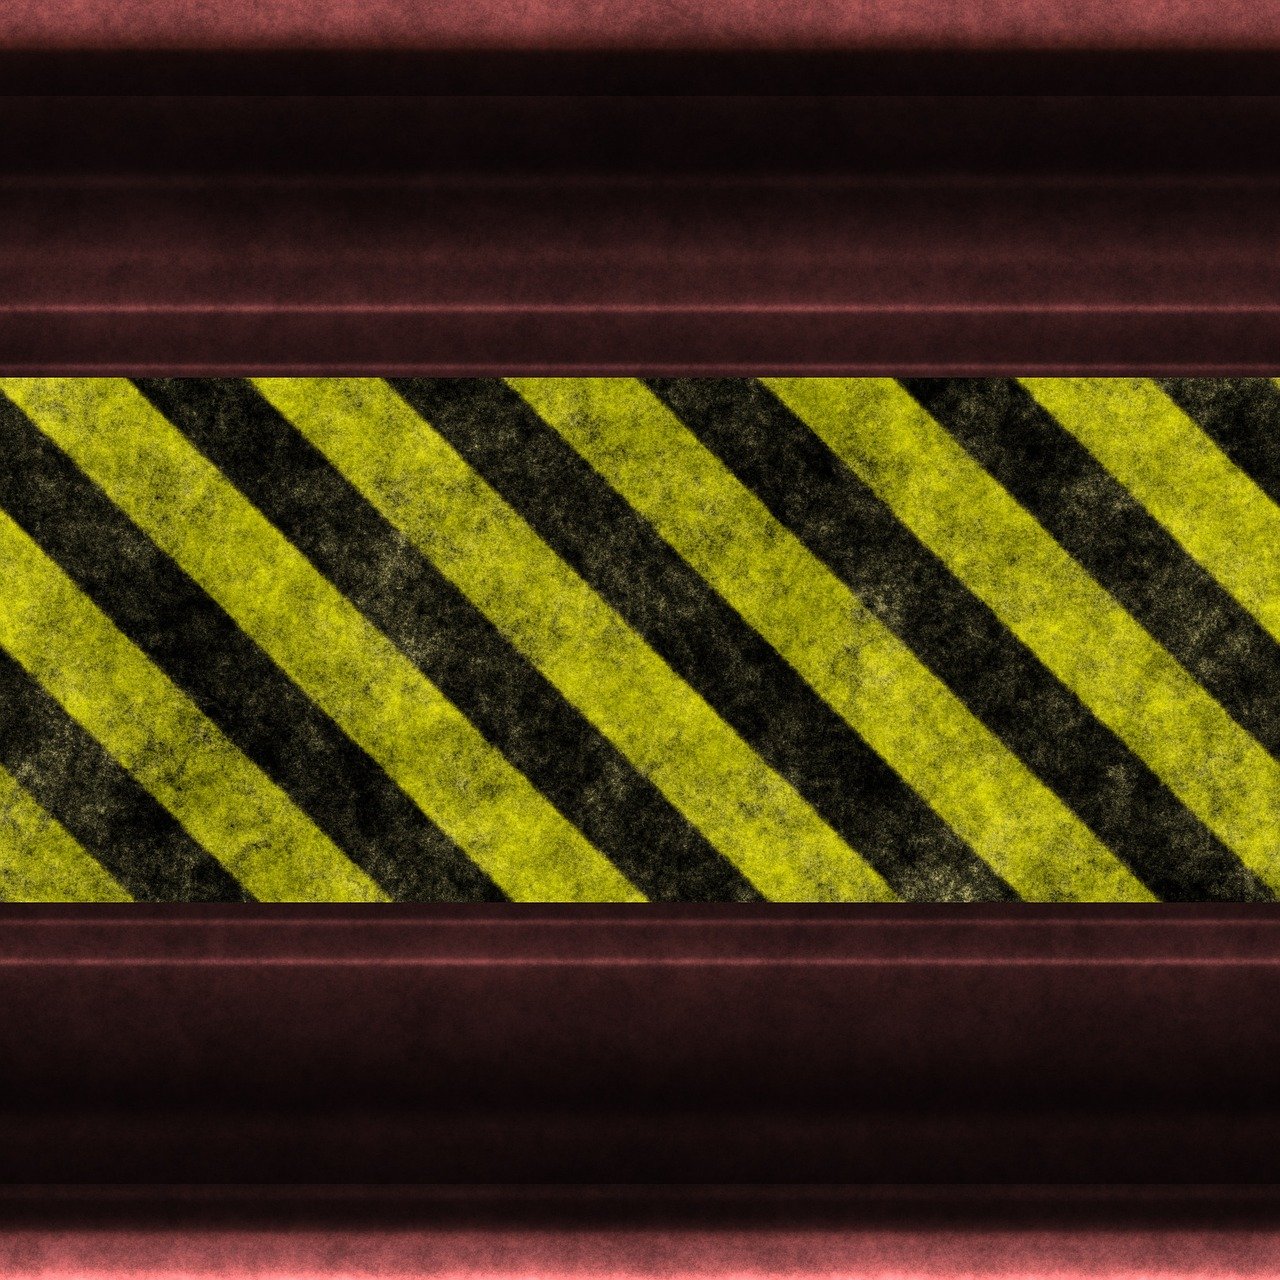 a close up of a yellow and black hazard stripe, flickr, digital art, metal border, bloodbath battlefield background, 3 meters, spaceship hull texture